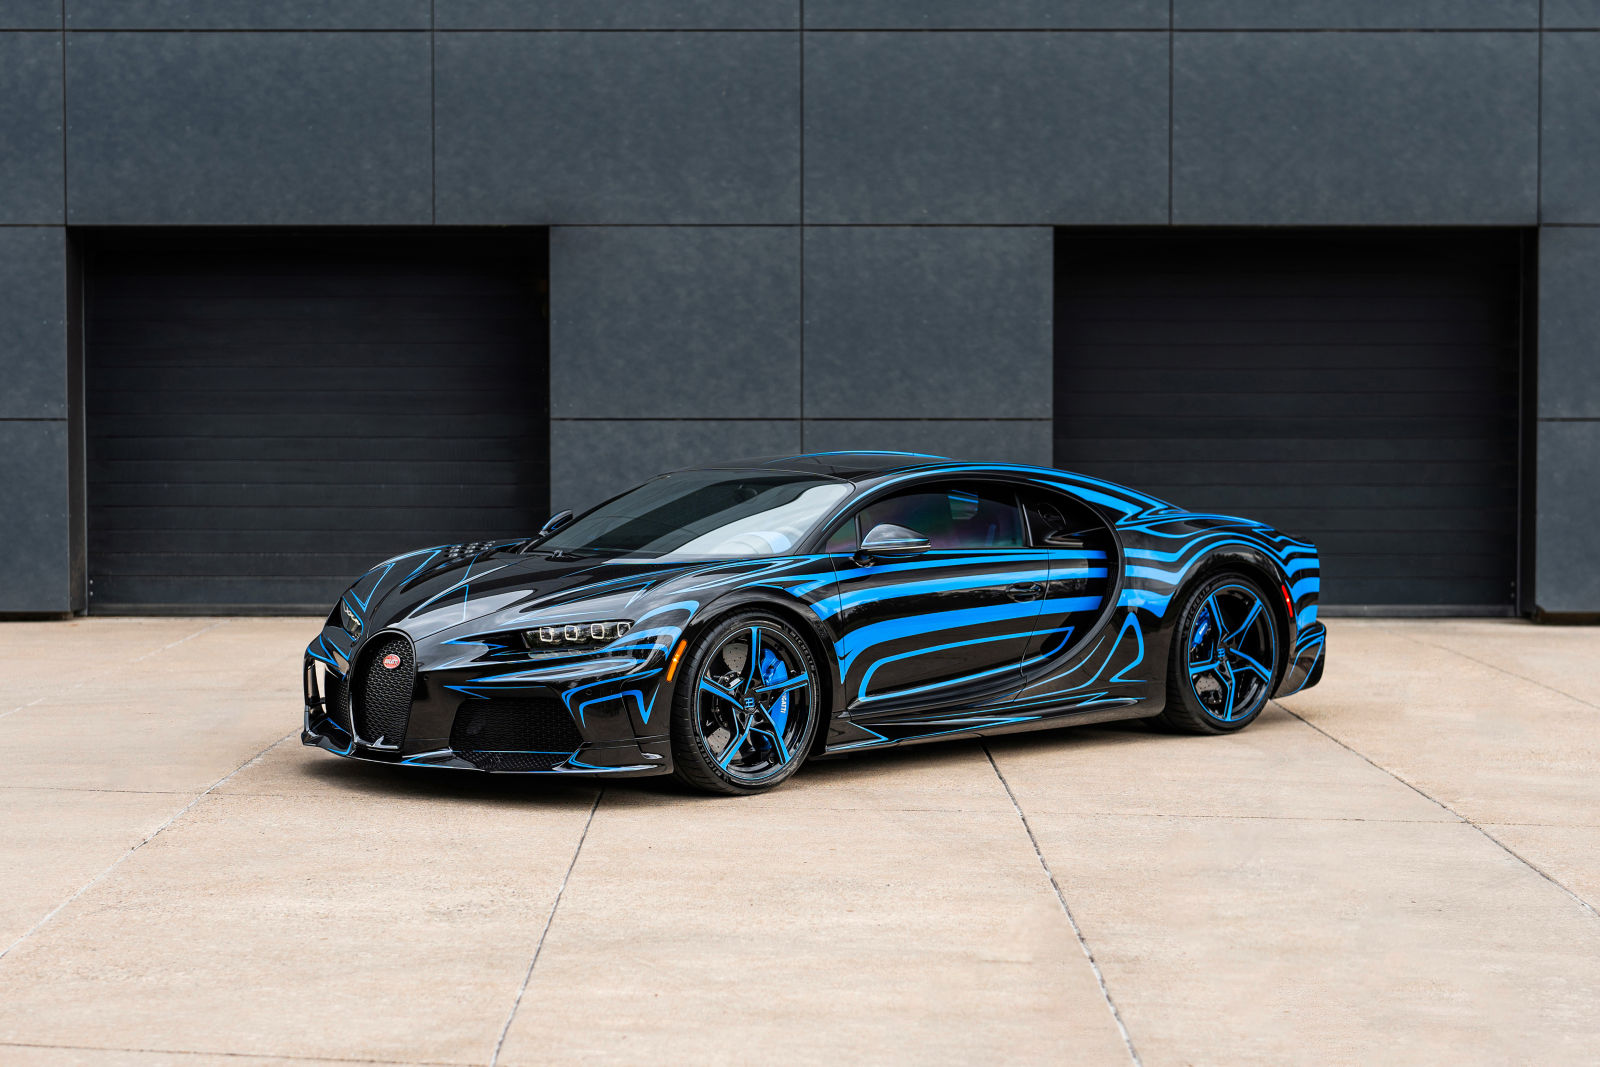 Two matching Bugatti passion creations creativity Bugatti – and Newsroom of love are story a